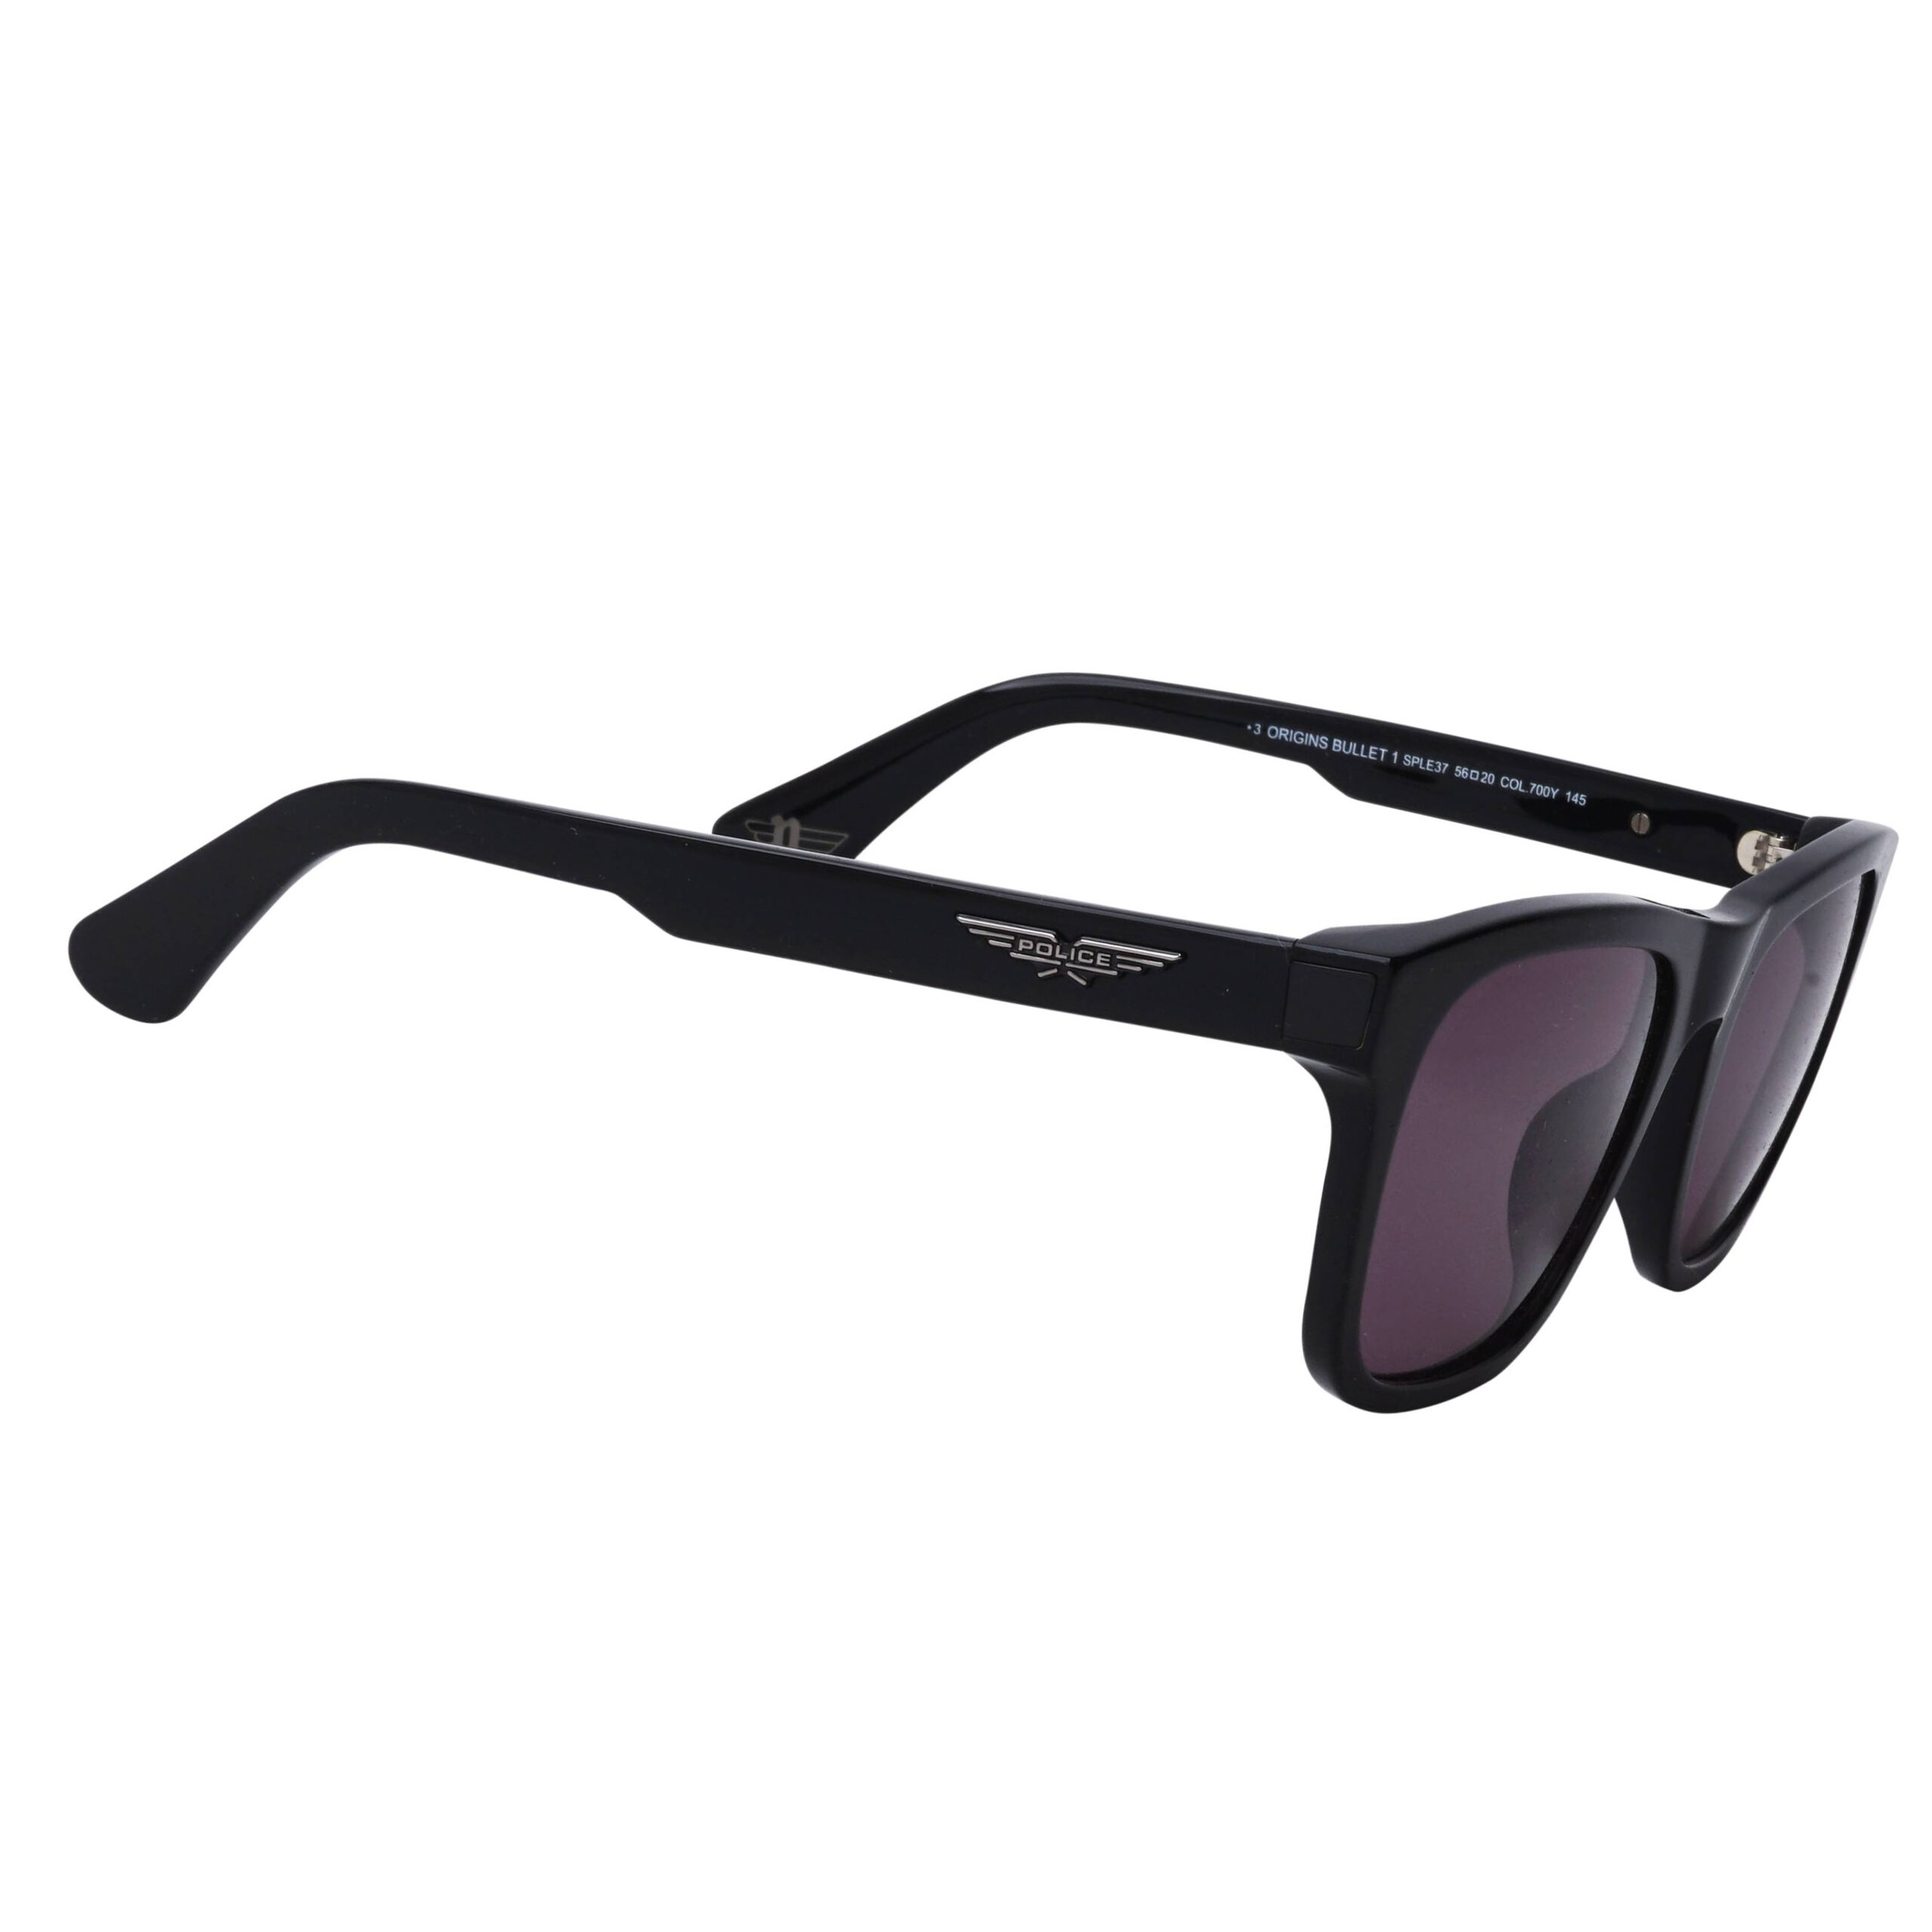 Police Sunglasses SPLE37 700Y Black